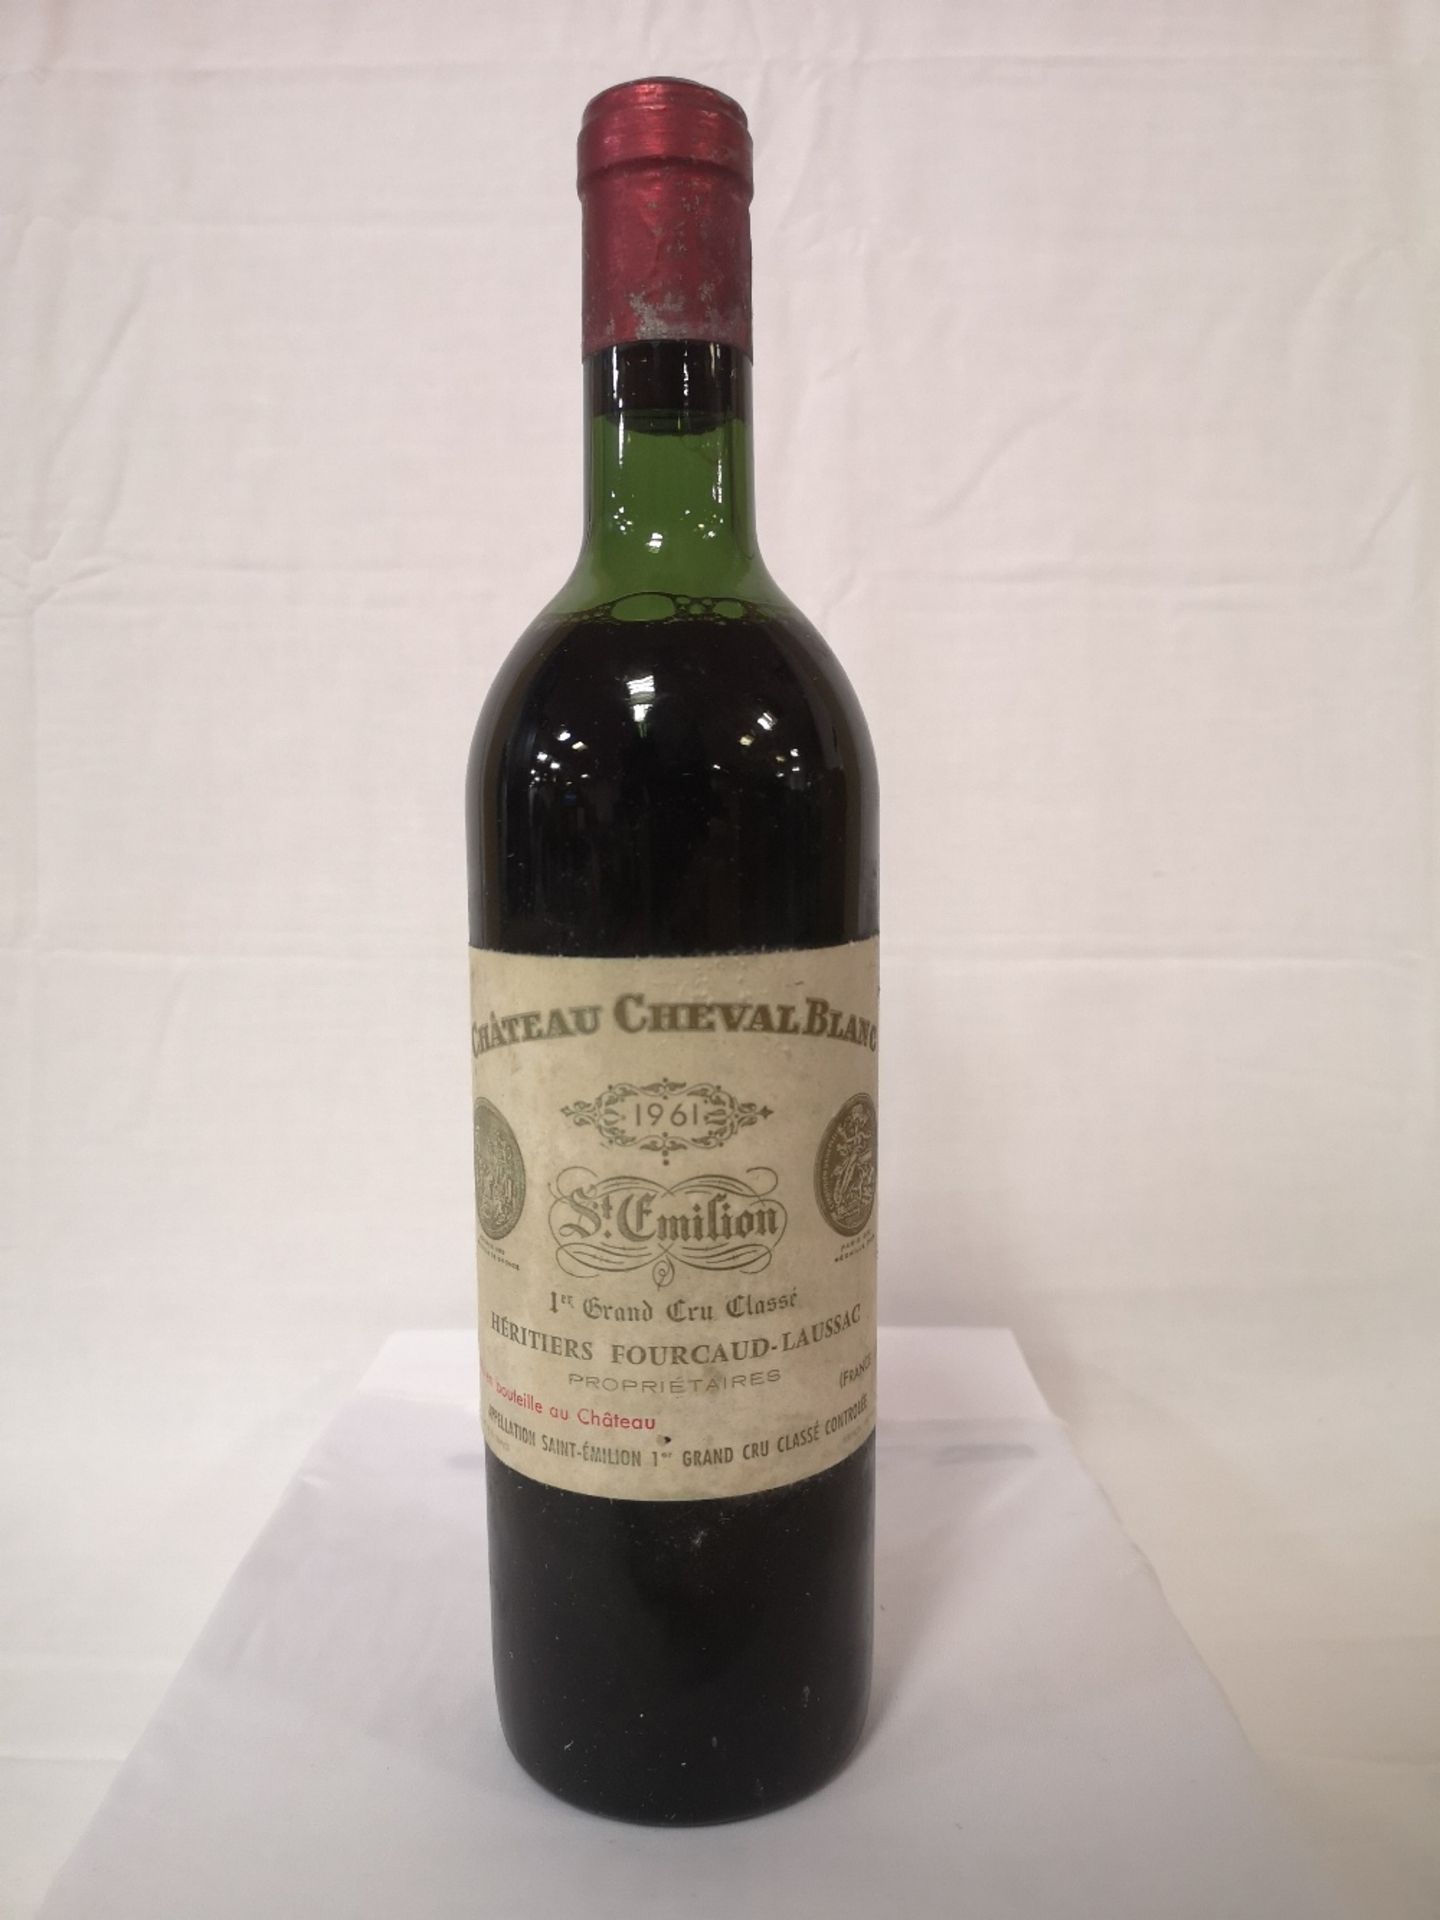 (1) Bottle of Cheval Blanc 1961 (750ml)